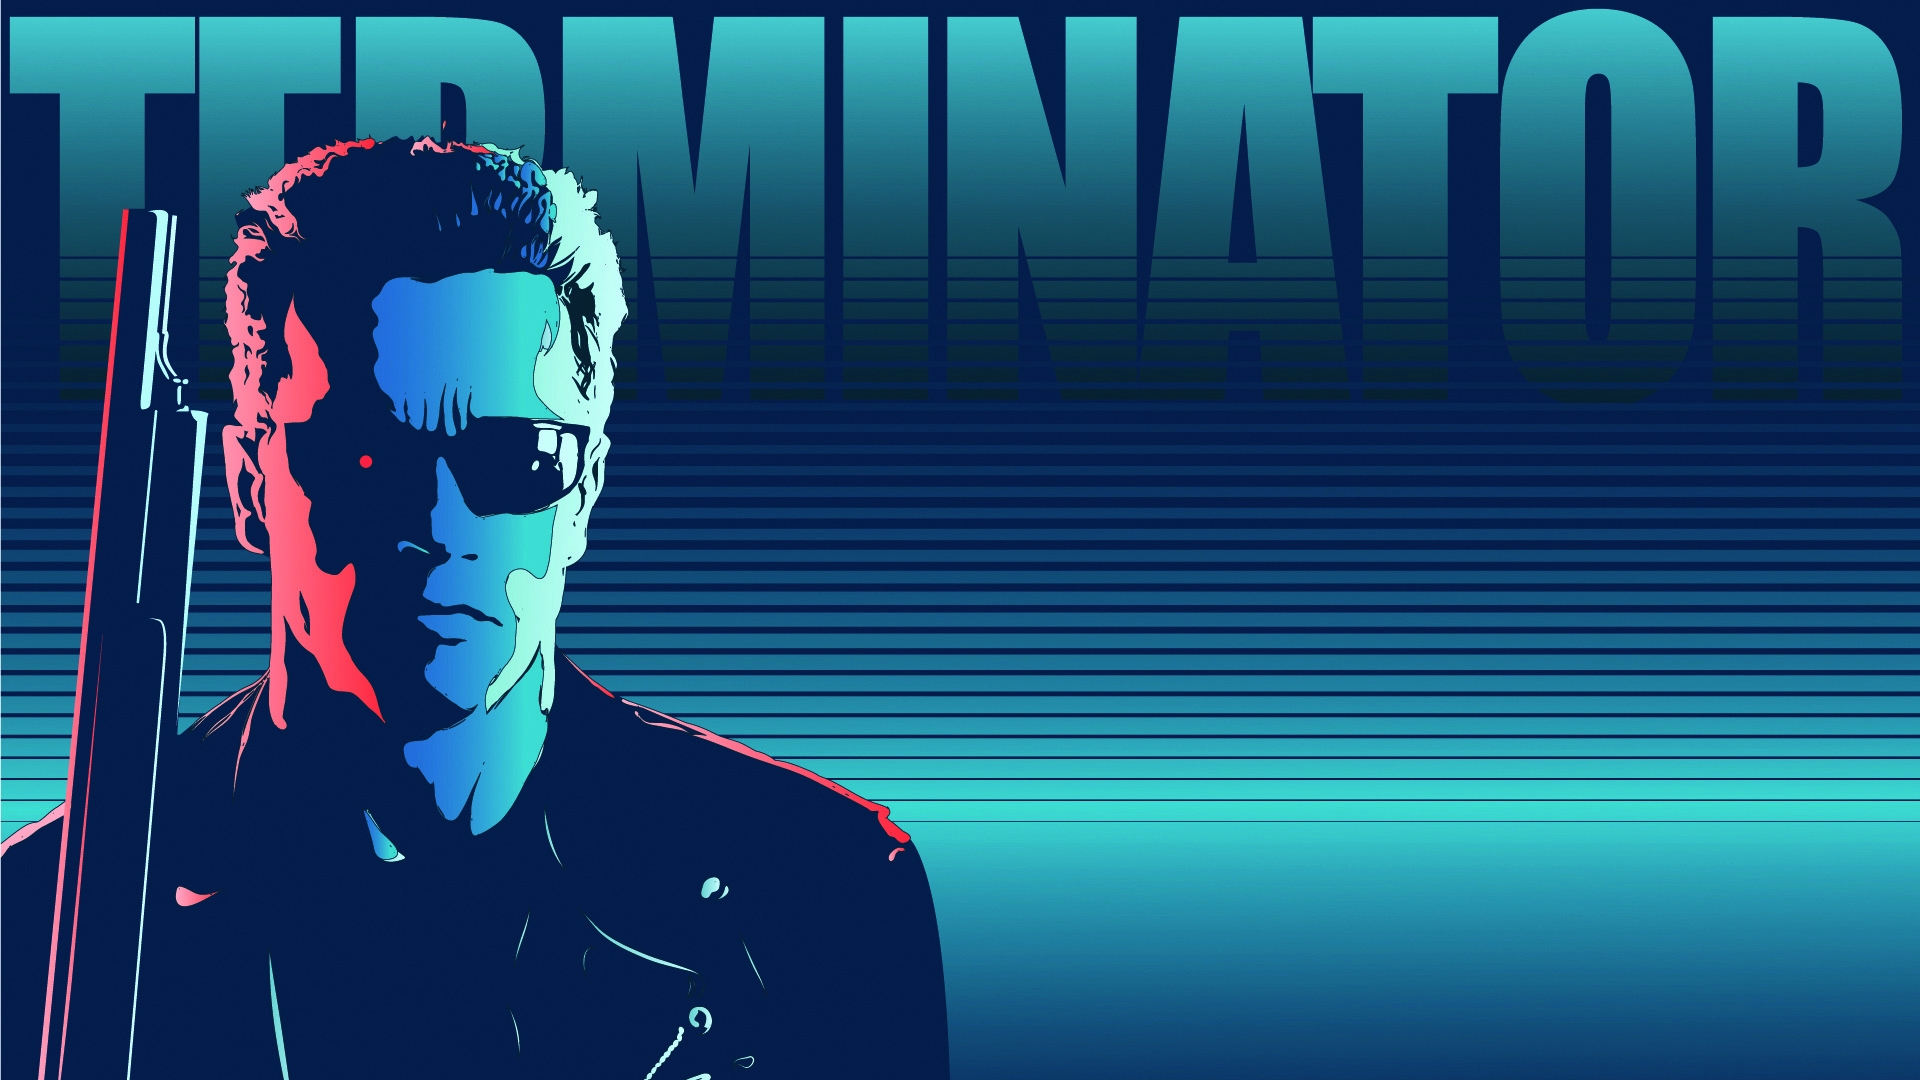 Terminator Judgment Day Wallpaper